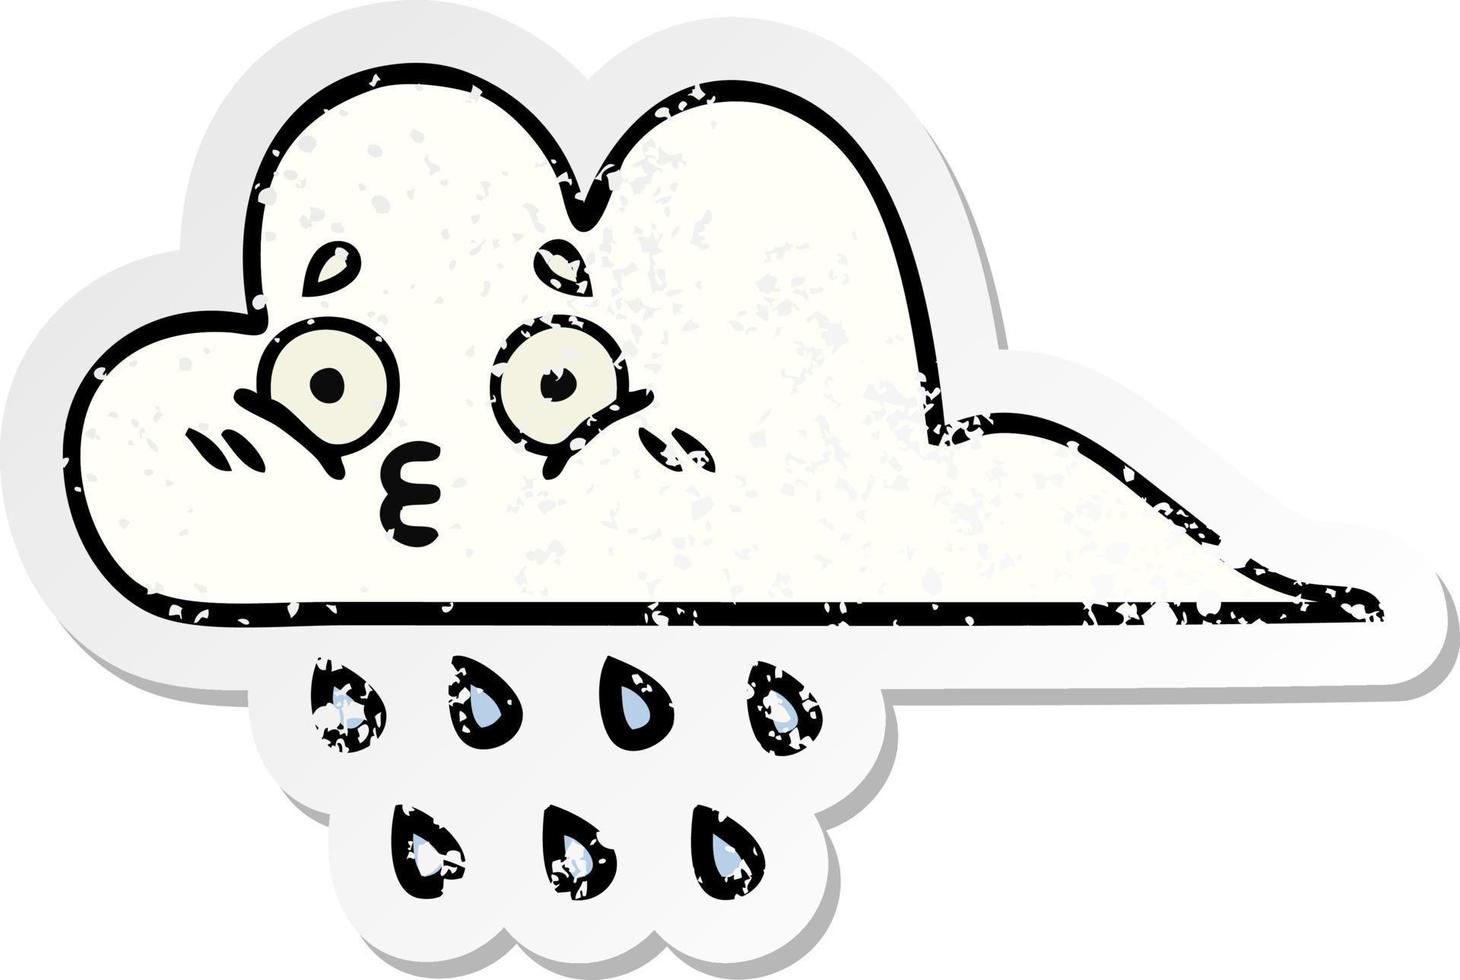 distressed sticker of a cute cartoon rain cloud vector